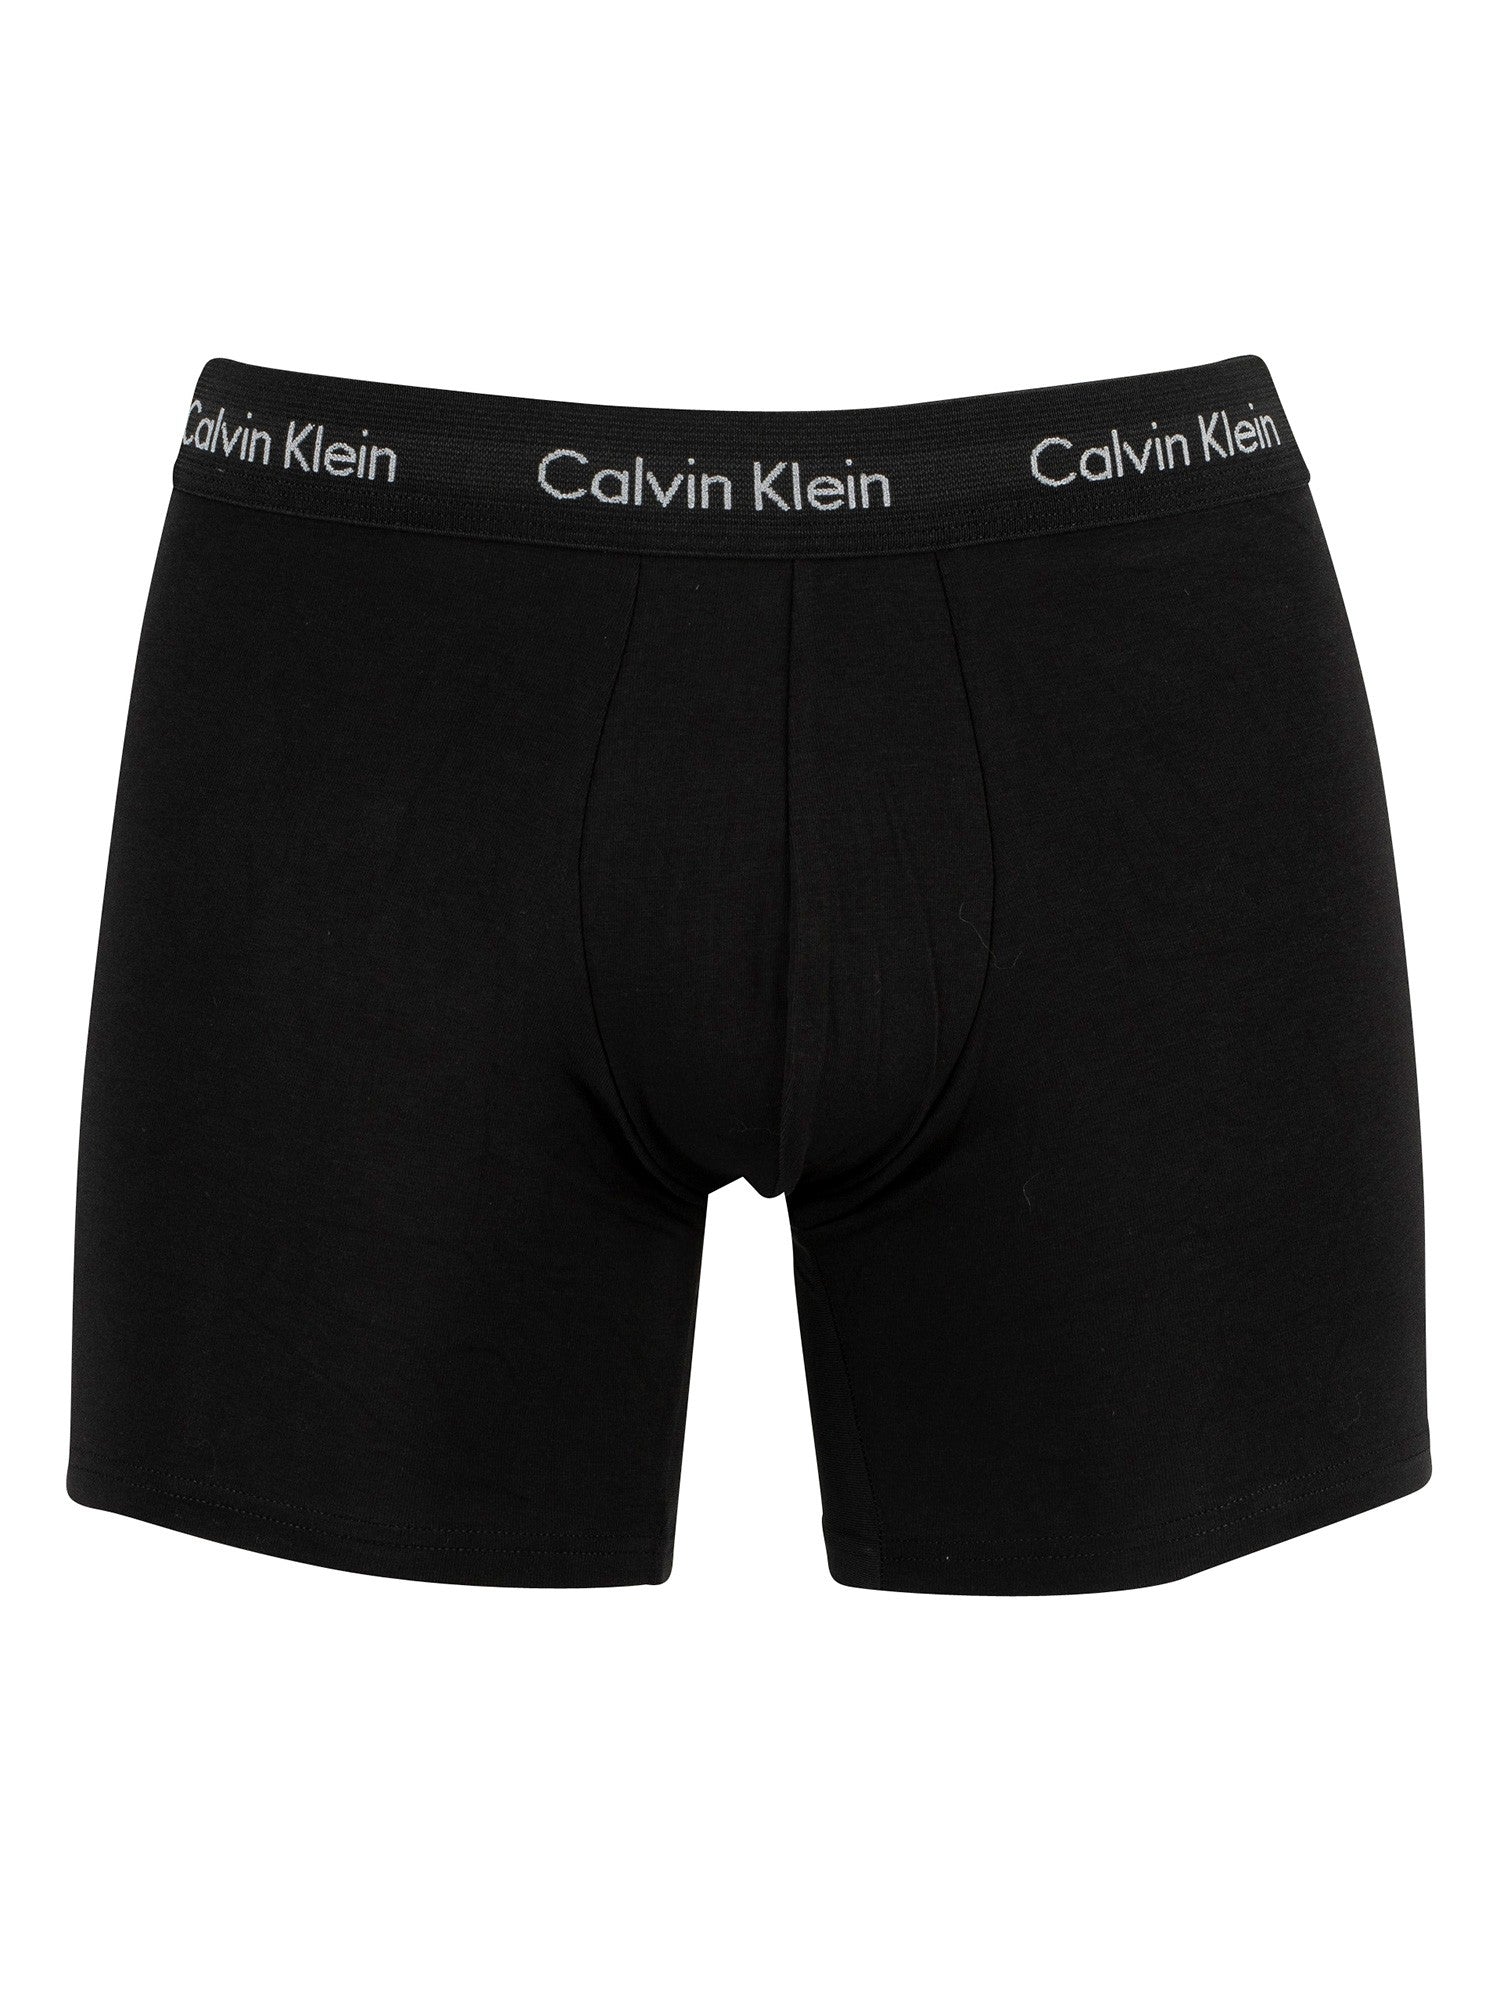 Calvin Klein 3 Pack Cotton Stretch - Longer Leg Boxer Brief Shorts